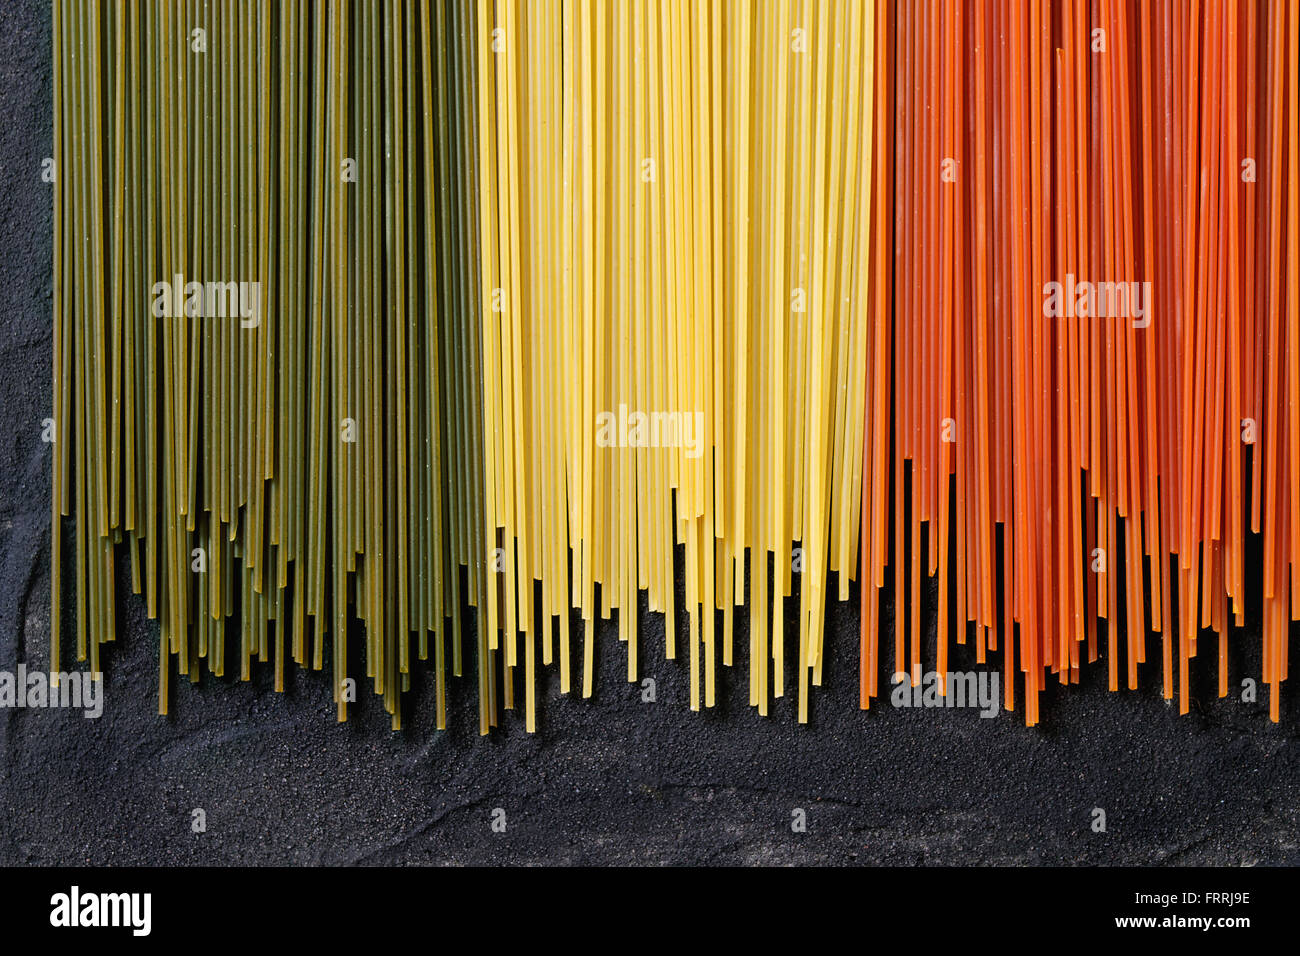 Dry colorful pasta spaghetti Stock Photo